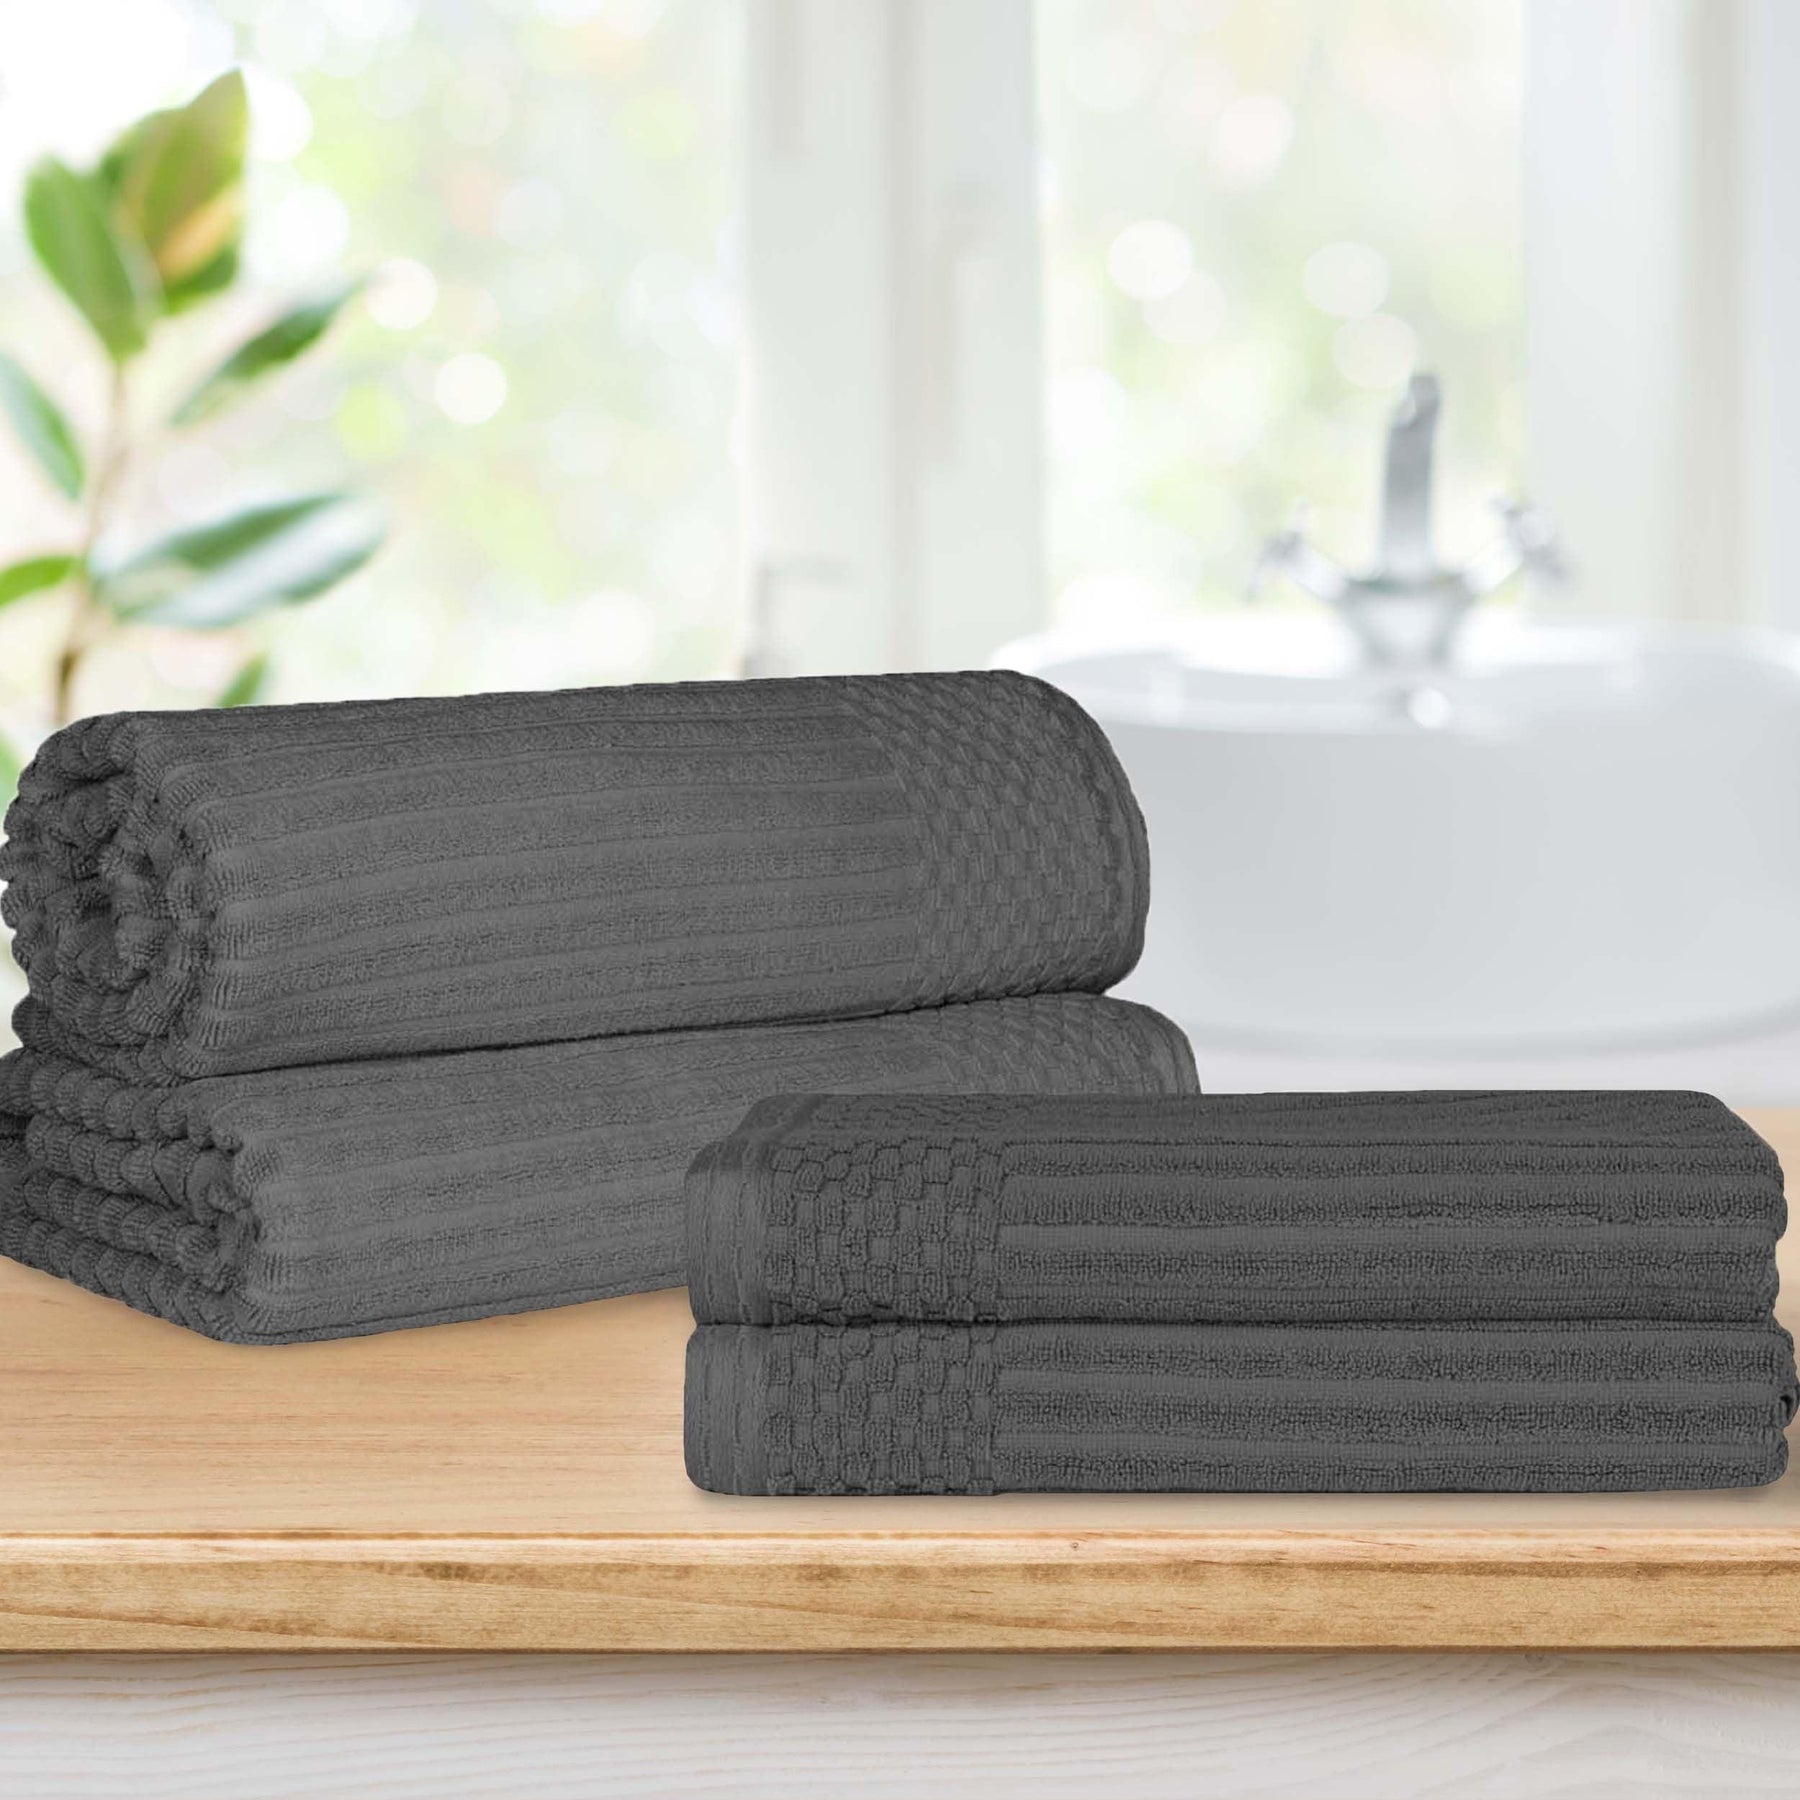 Superior Soho Ribbed Textured Cotton Ultra-Absorbent Bath Sheet & Bath Towel Set - Charcoal